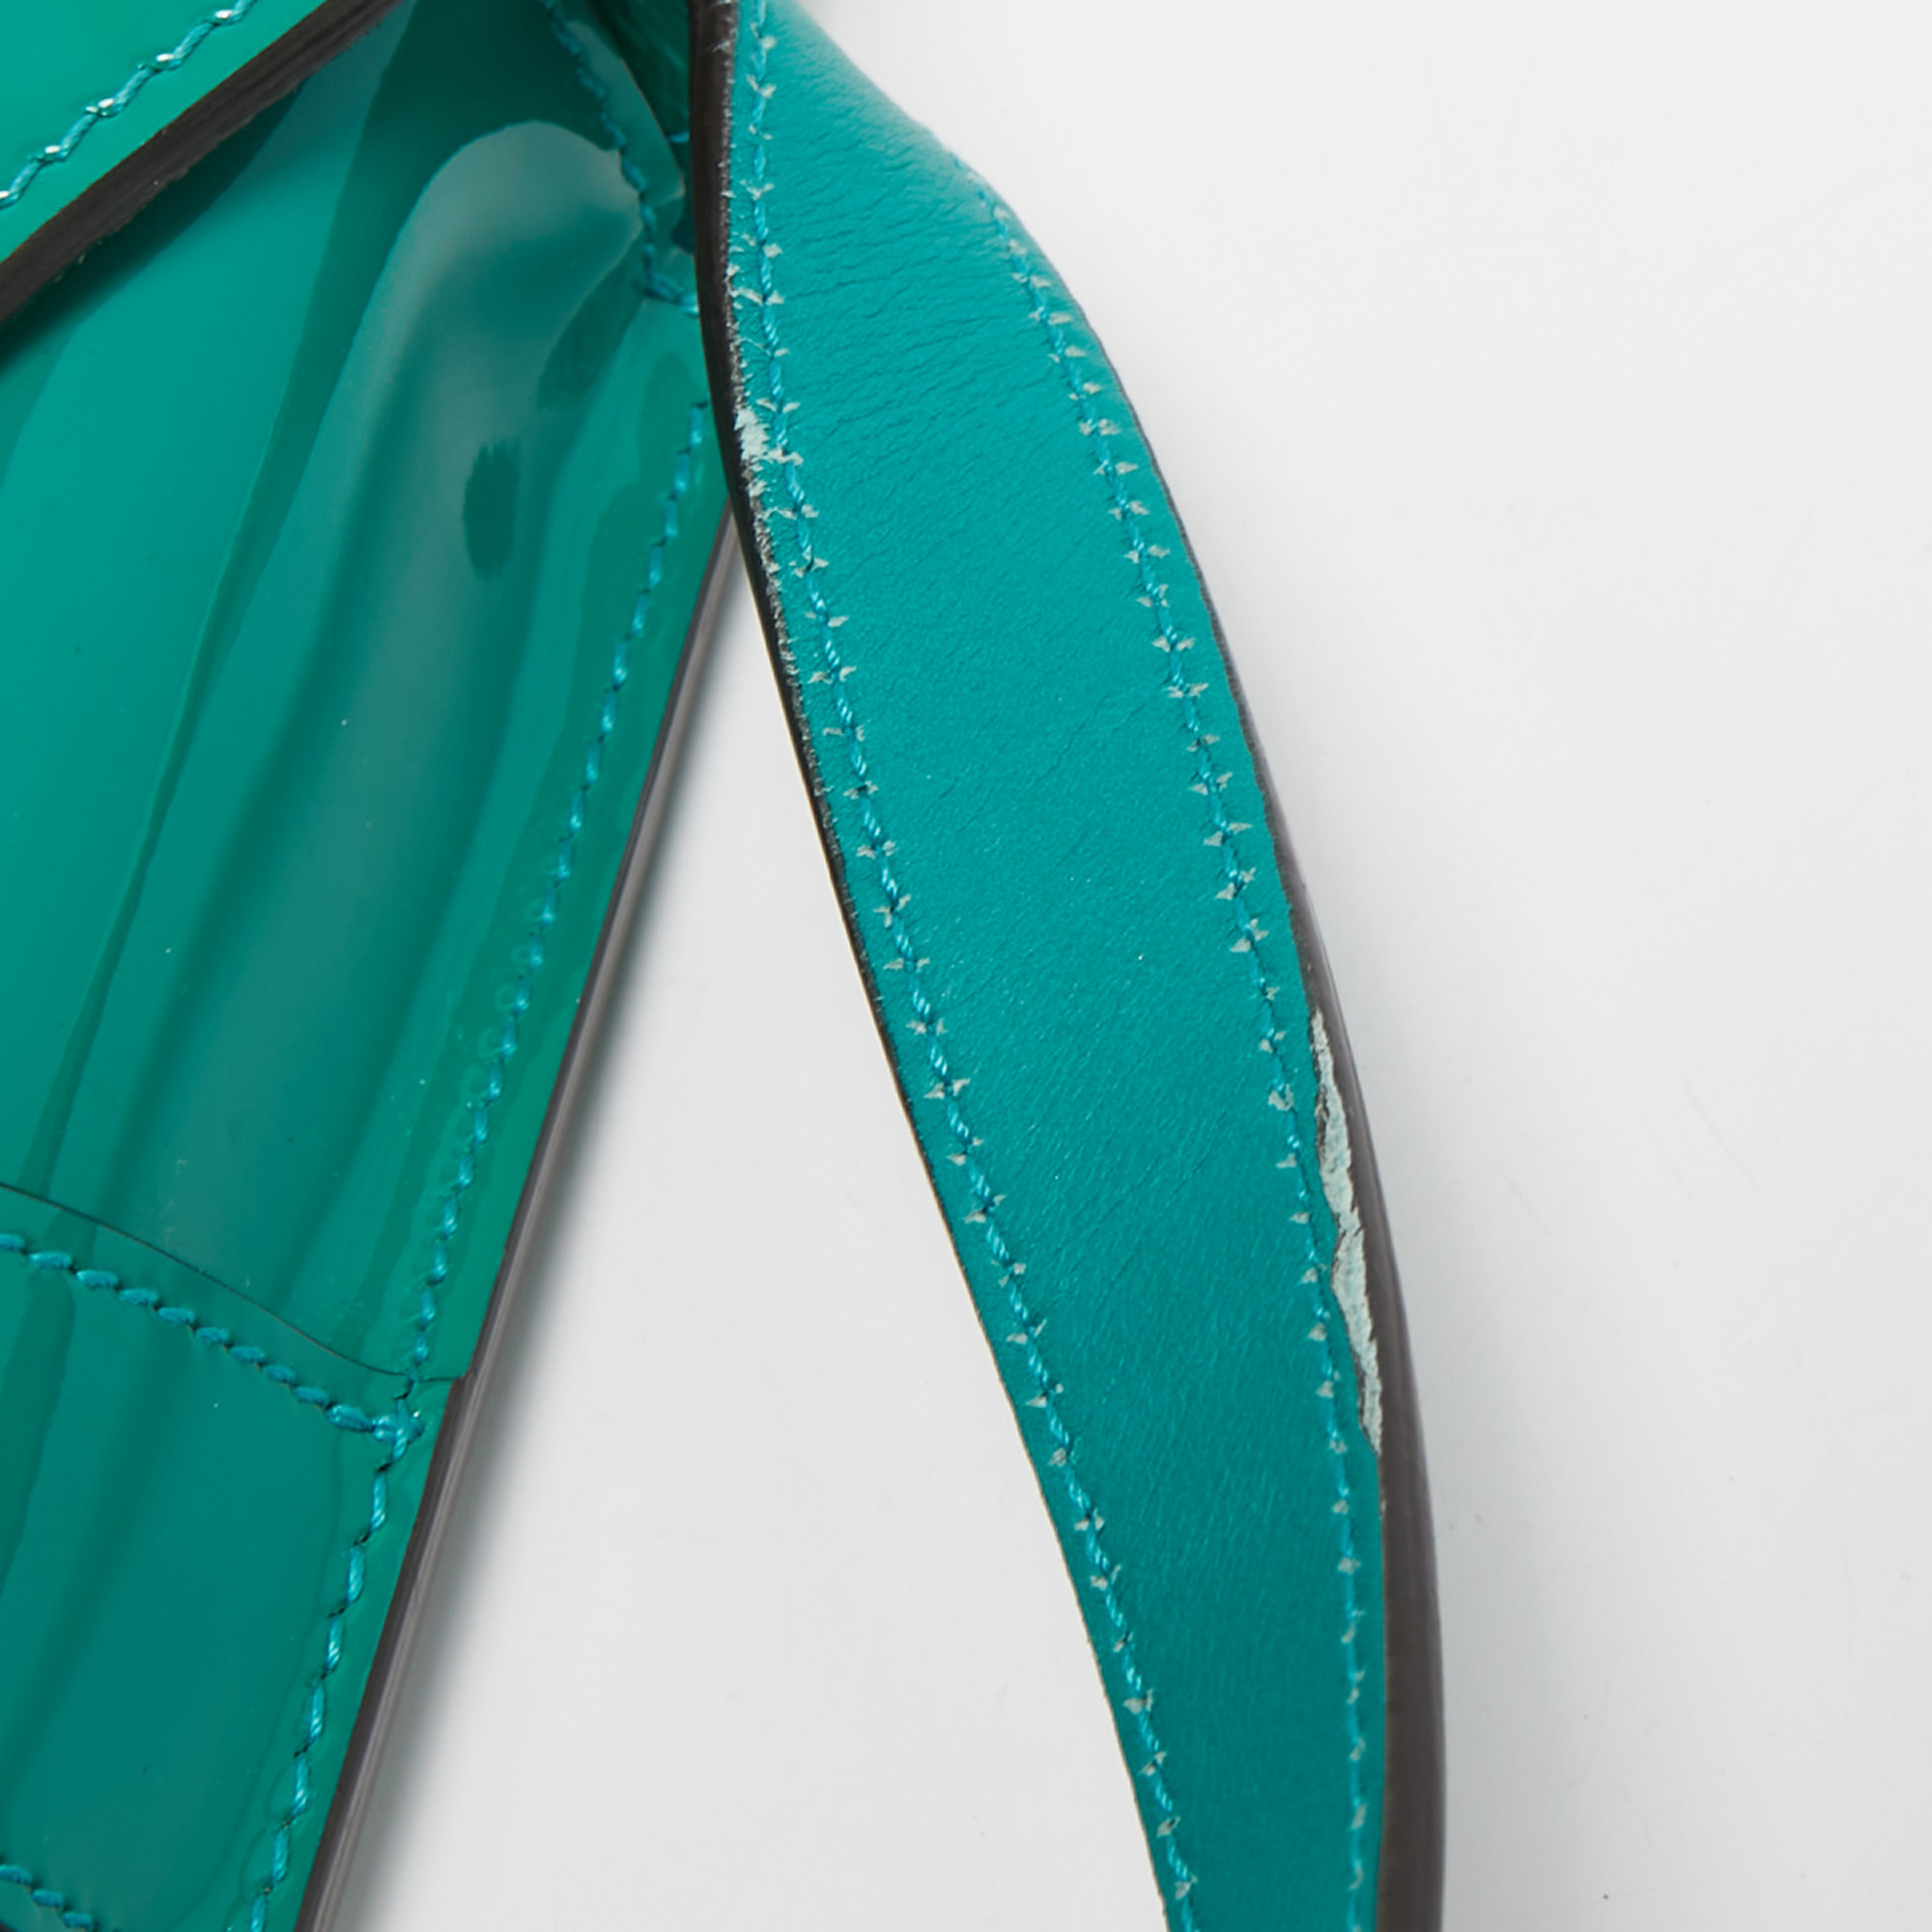 Gucci Green Patent Leather Bright Bit Crossbody Bag